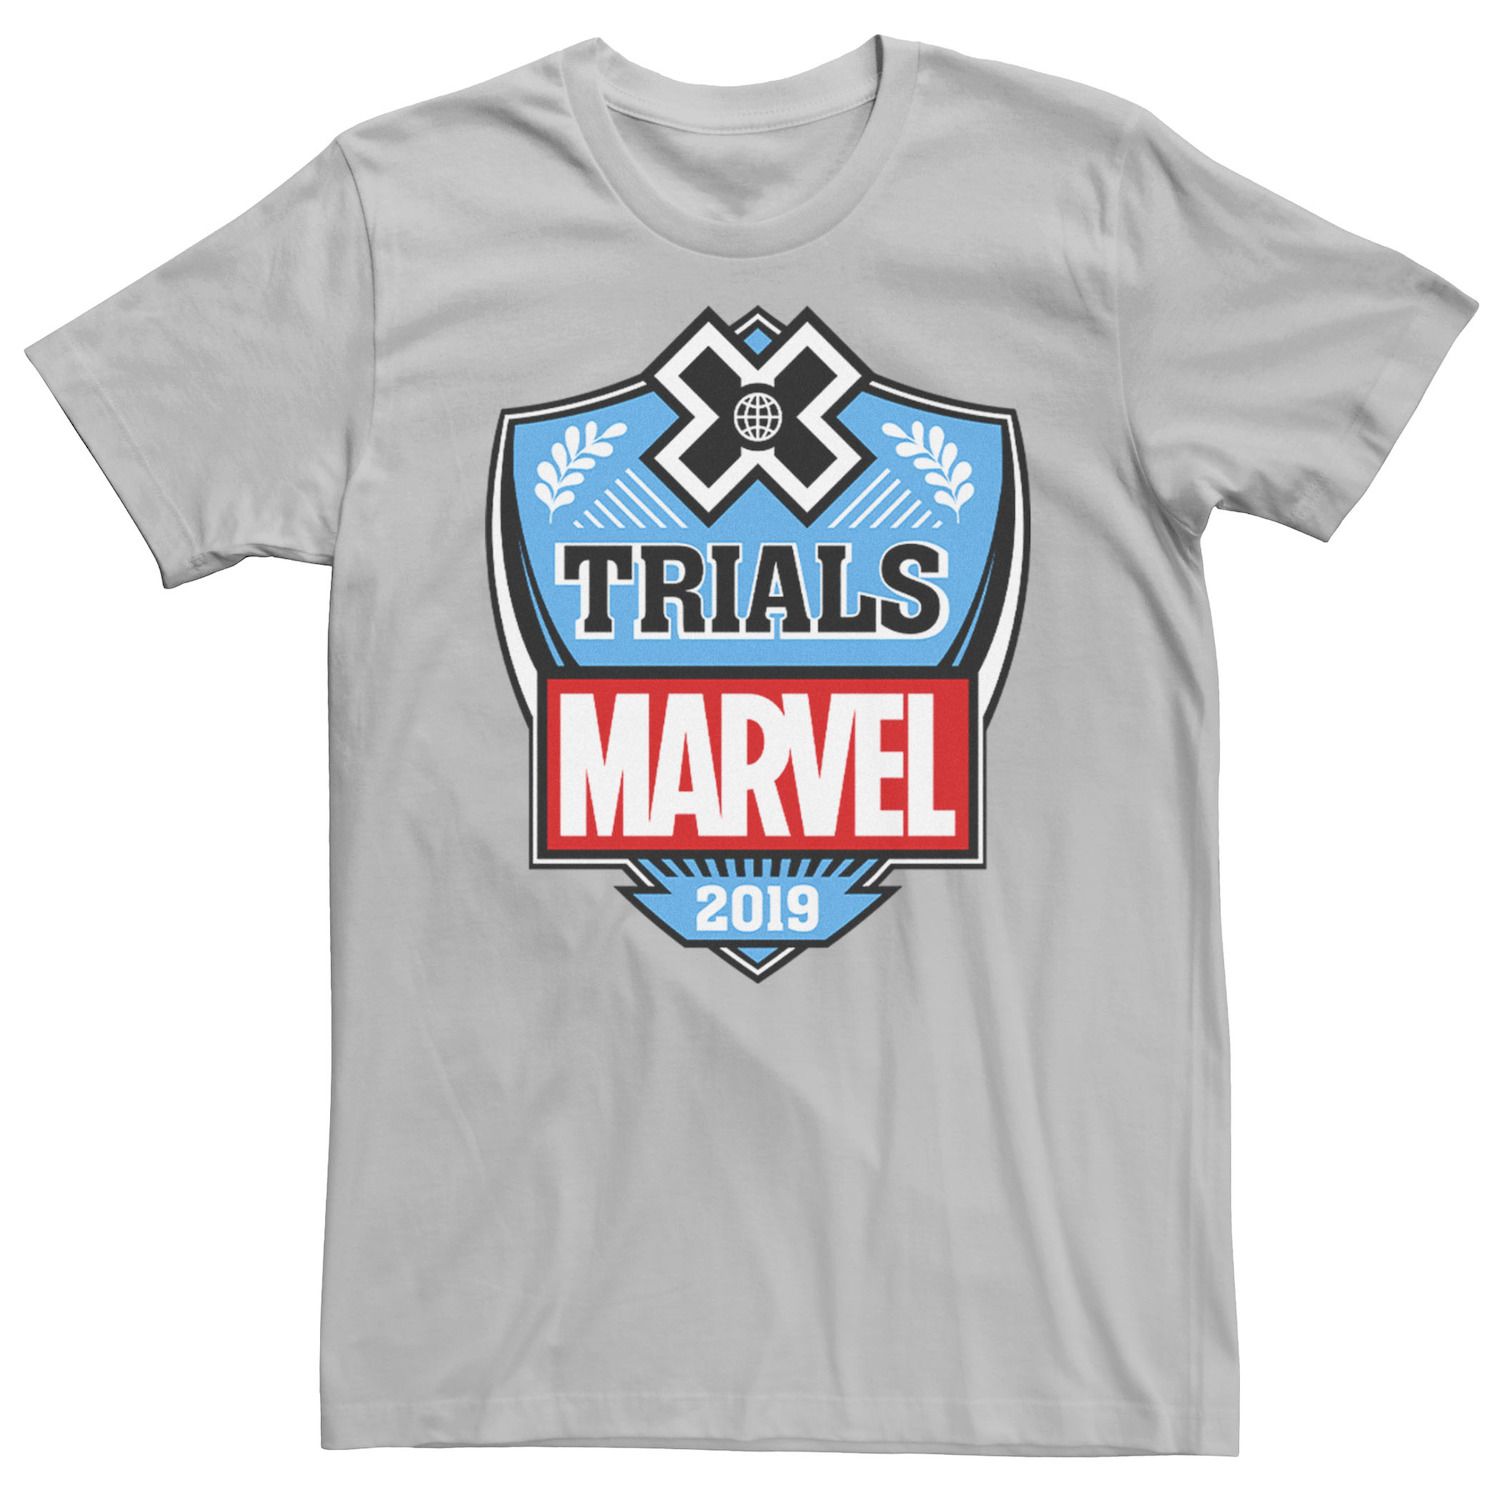 Мужская футболка Trials Marvel, серебристый trials rising